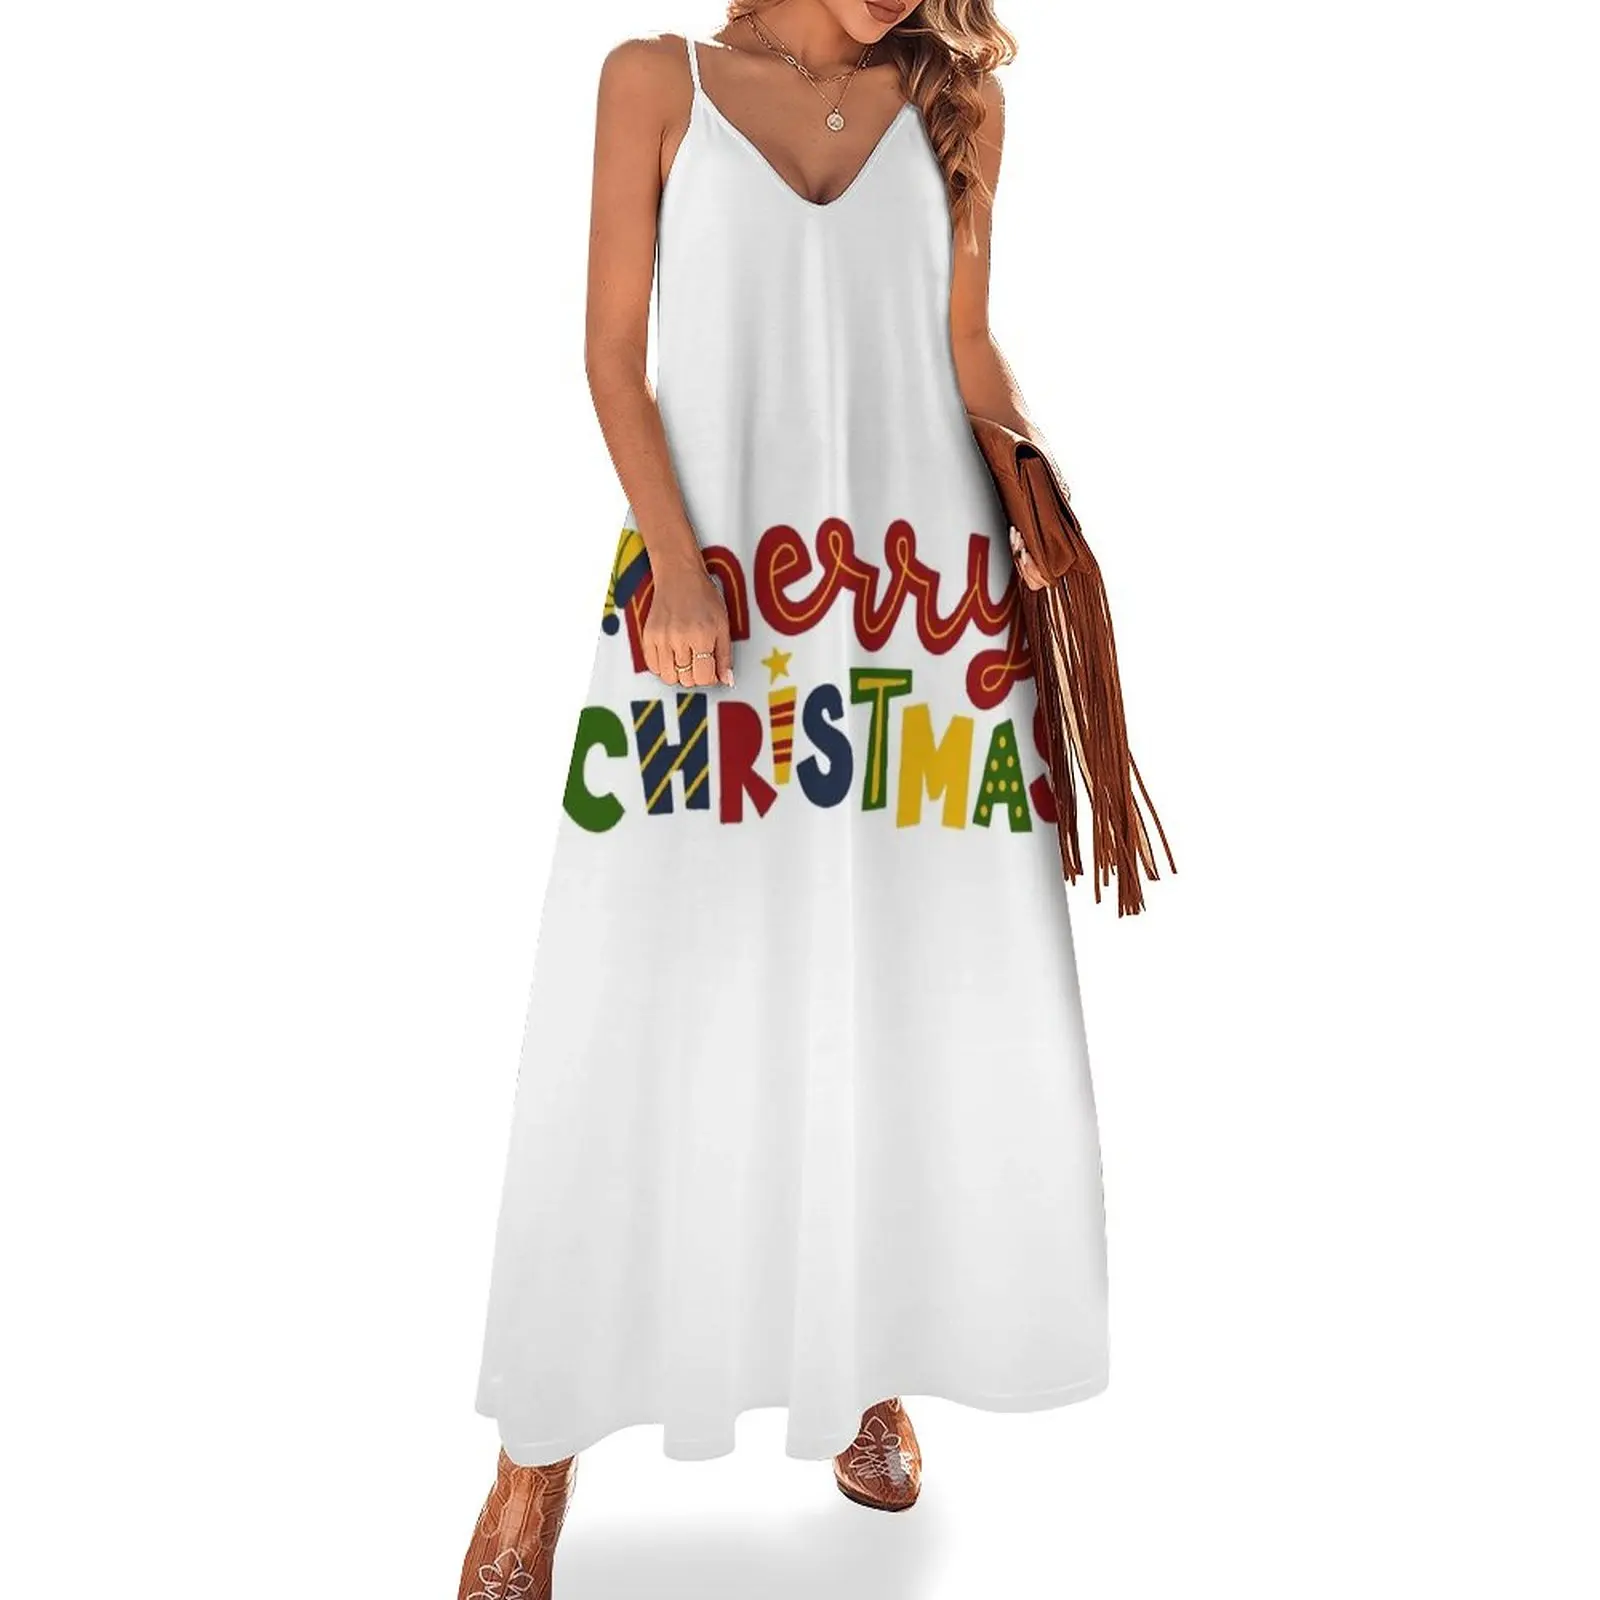 

Merry Christmas Sleeveless Dress womens dress african dresses for woman prom dresses Women's summer suit